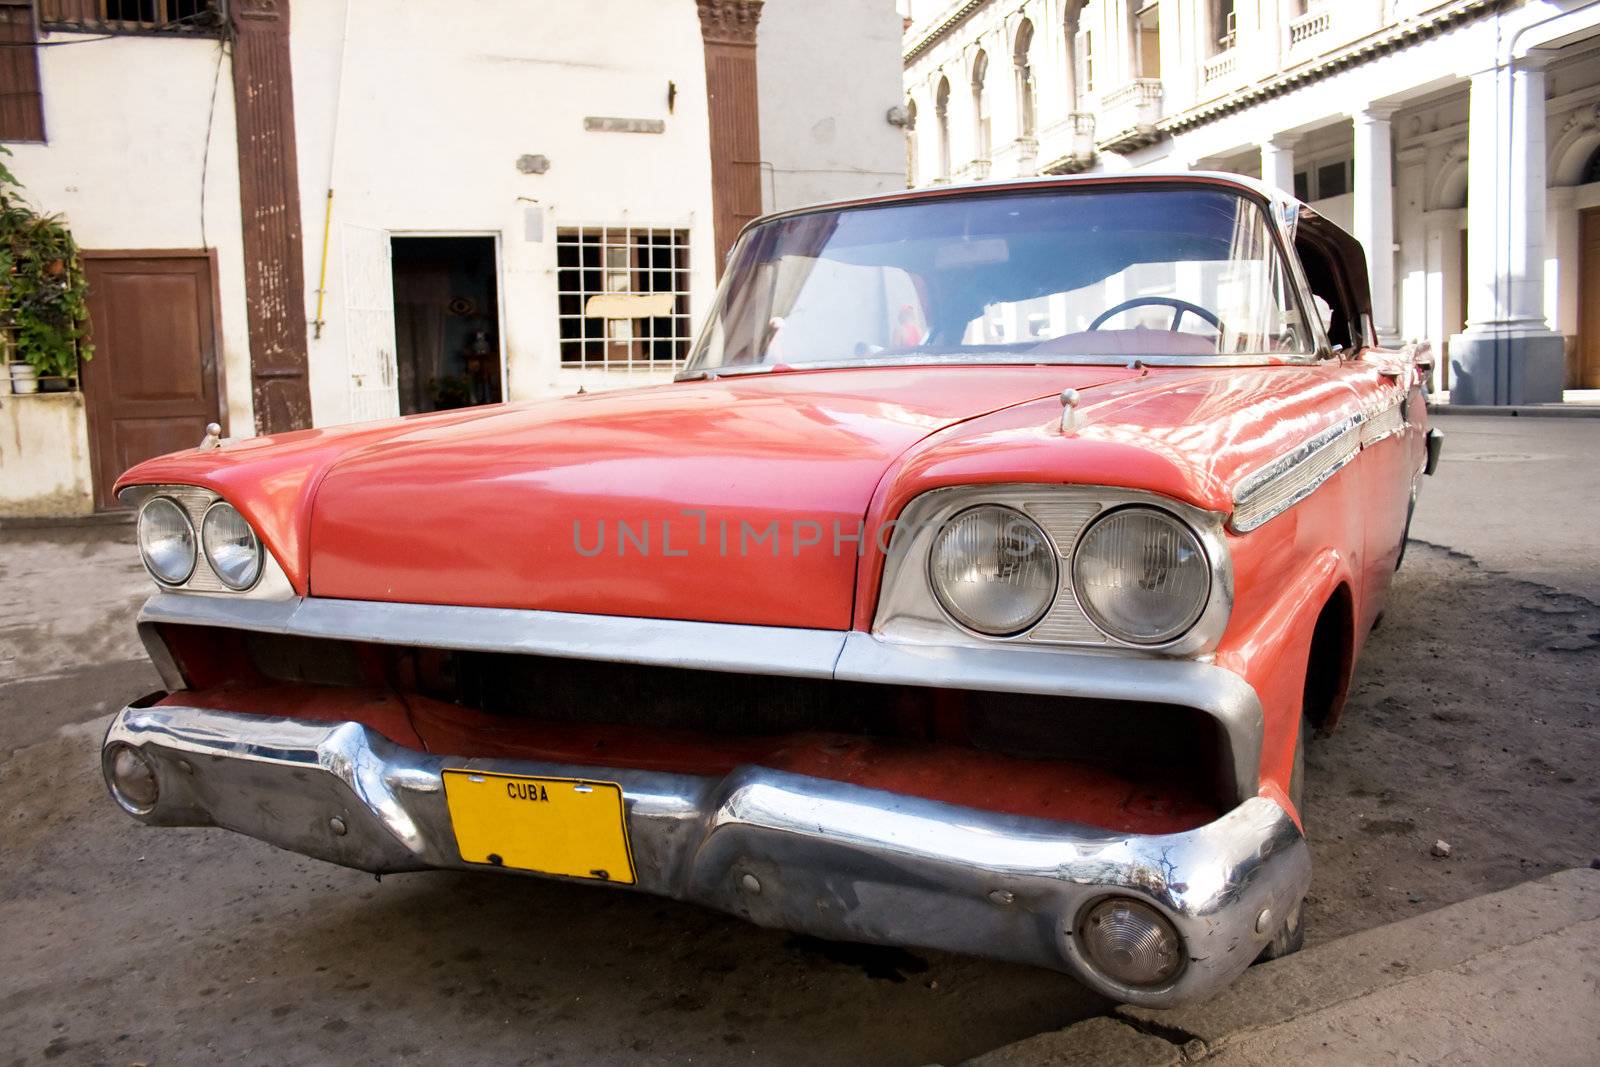 Cuba. Old red car in Havana.